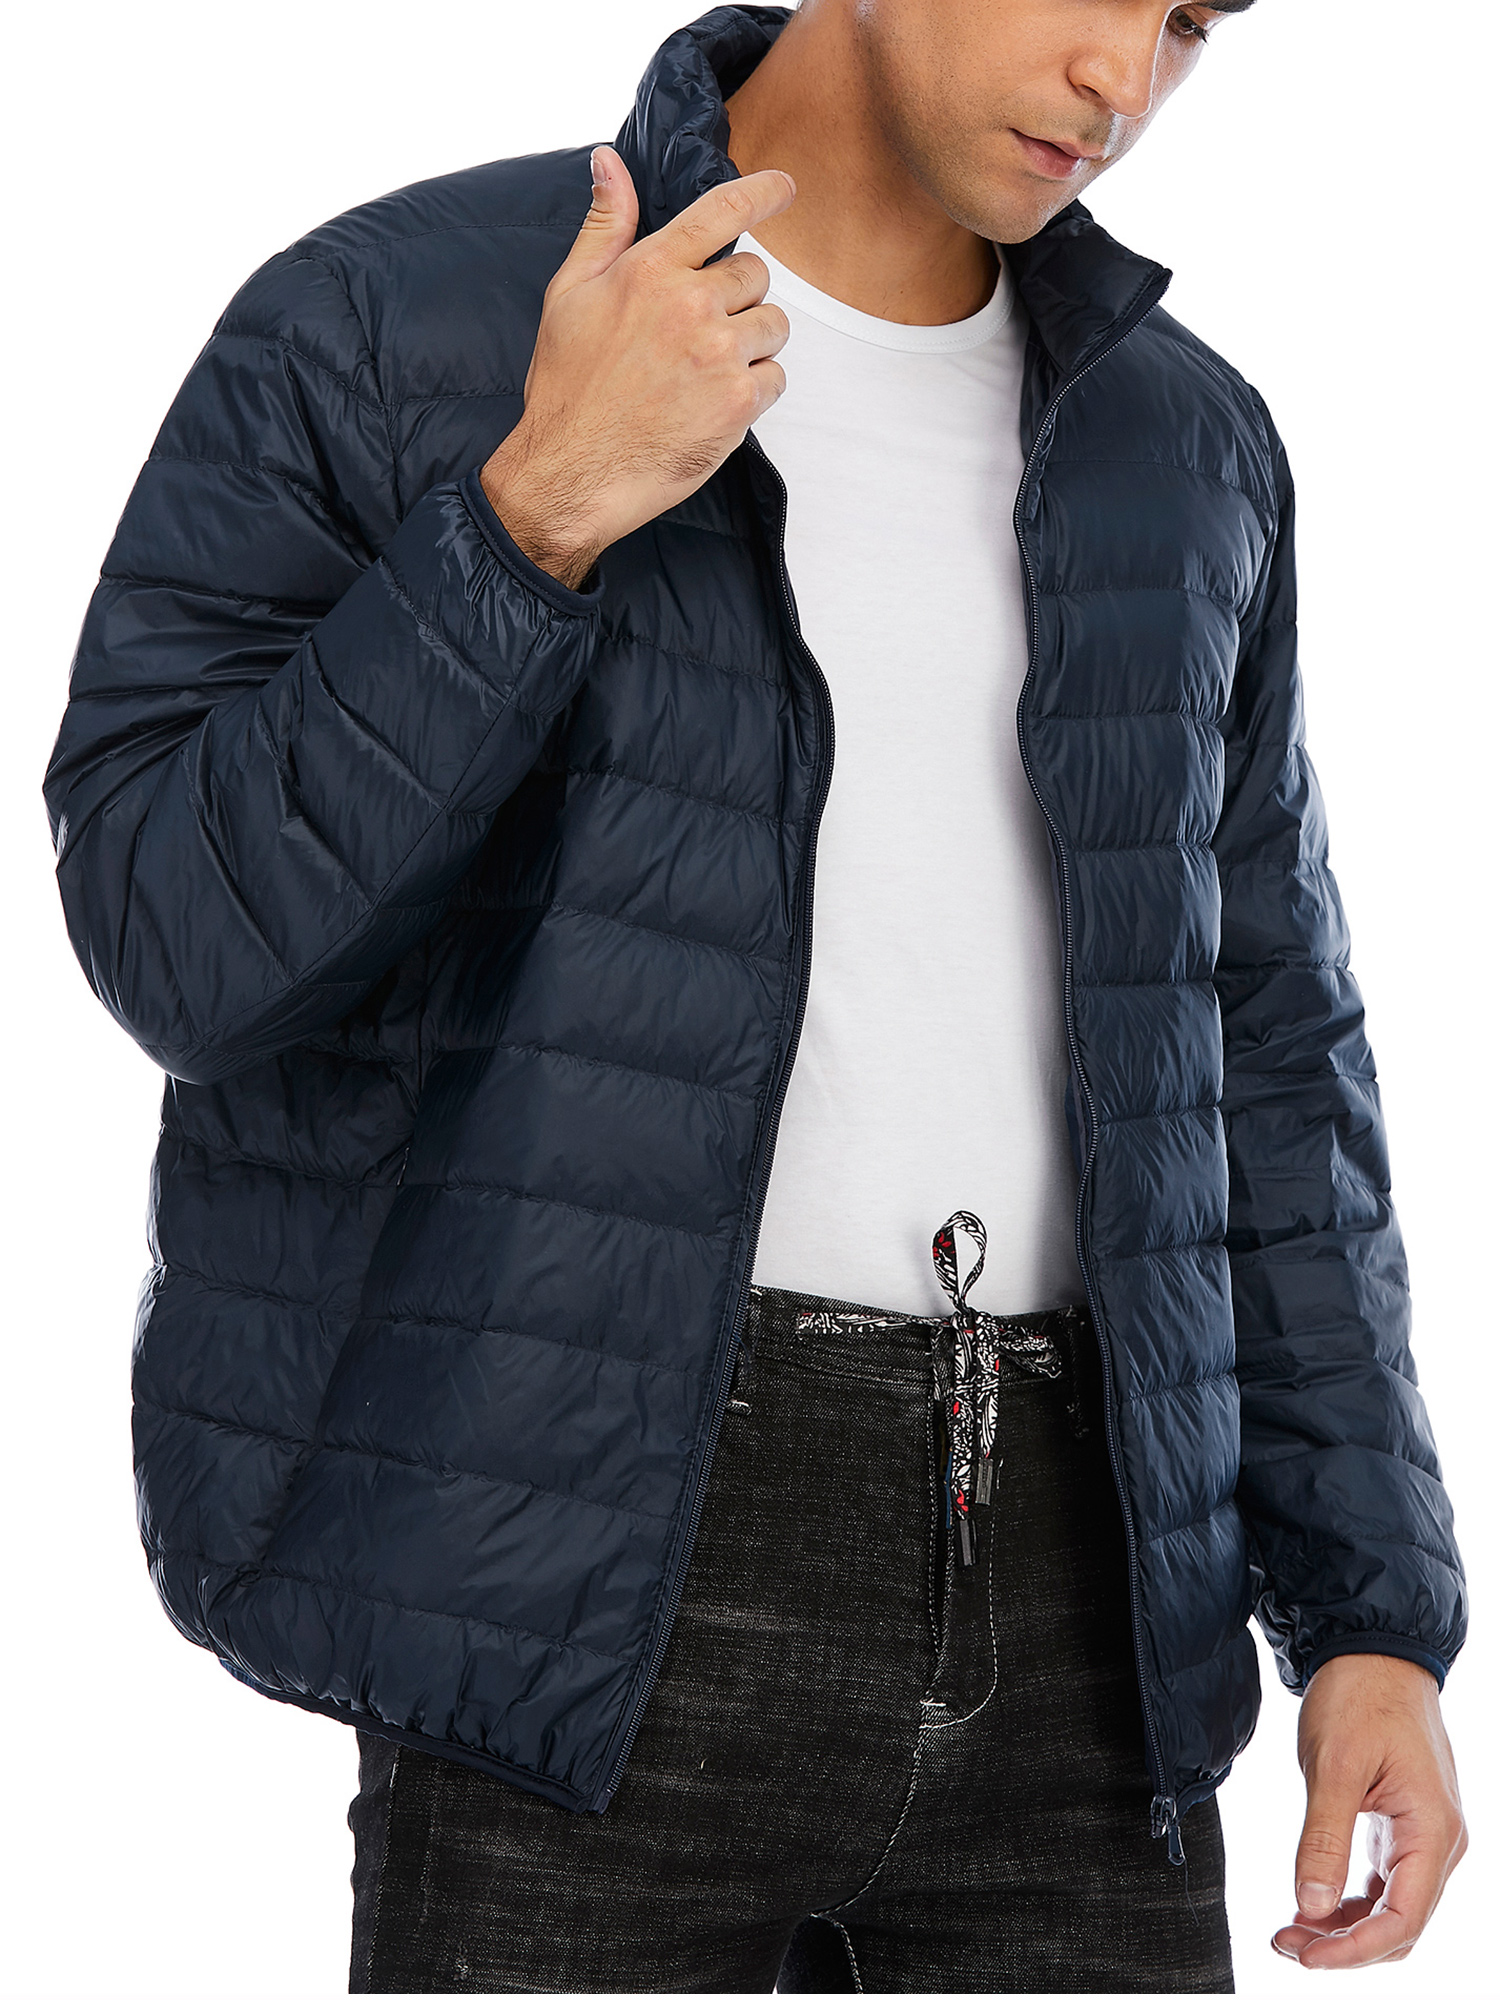 FOCUSSEXY Mens Down Puffer Jacket Lightweight Packable Winter Coat Men's Down Puffer Jacket Warm Casual Outdoor Zipper Jacket Packable Puffer Jacket, Blue - image 4 of 7